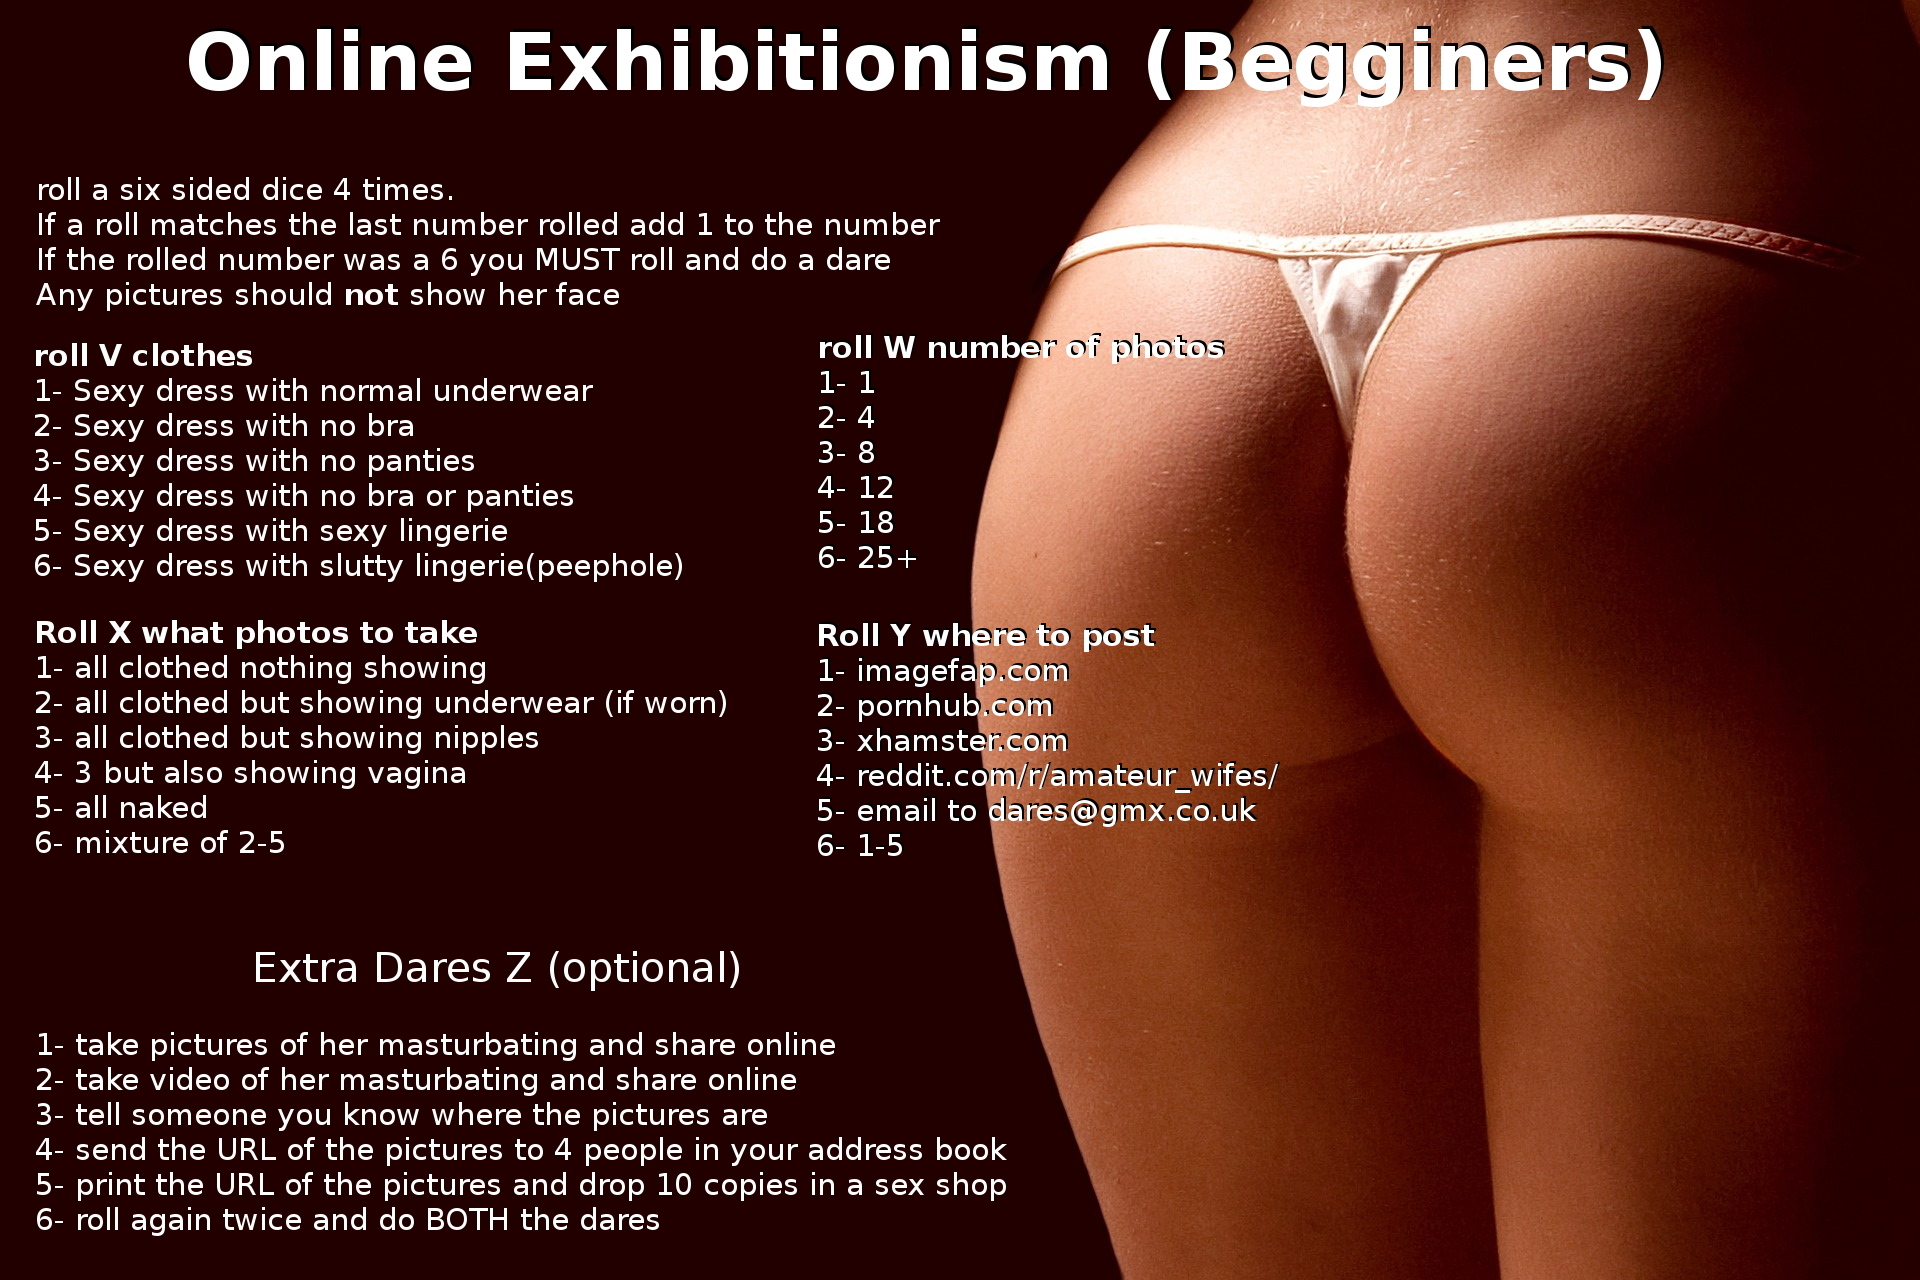 Online exhibitionism